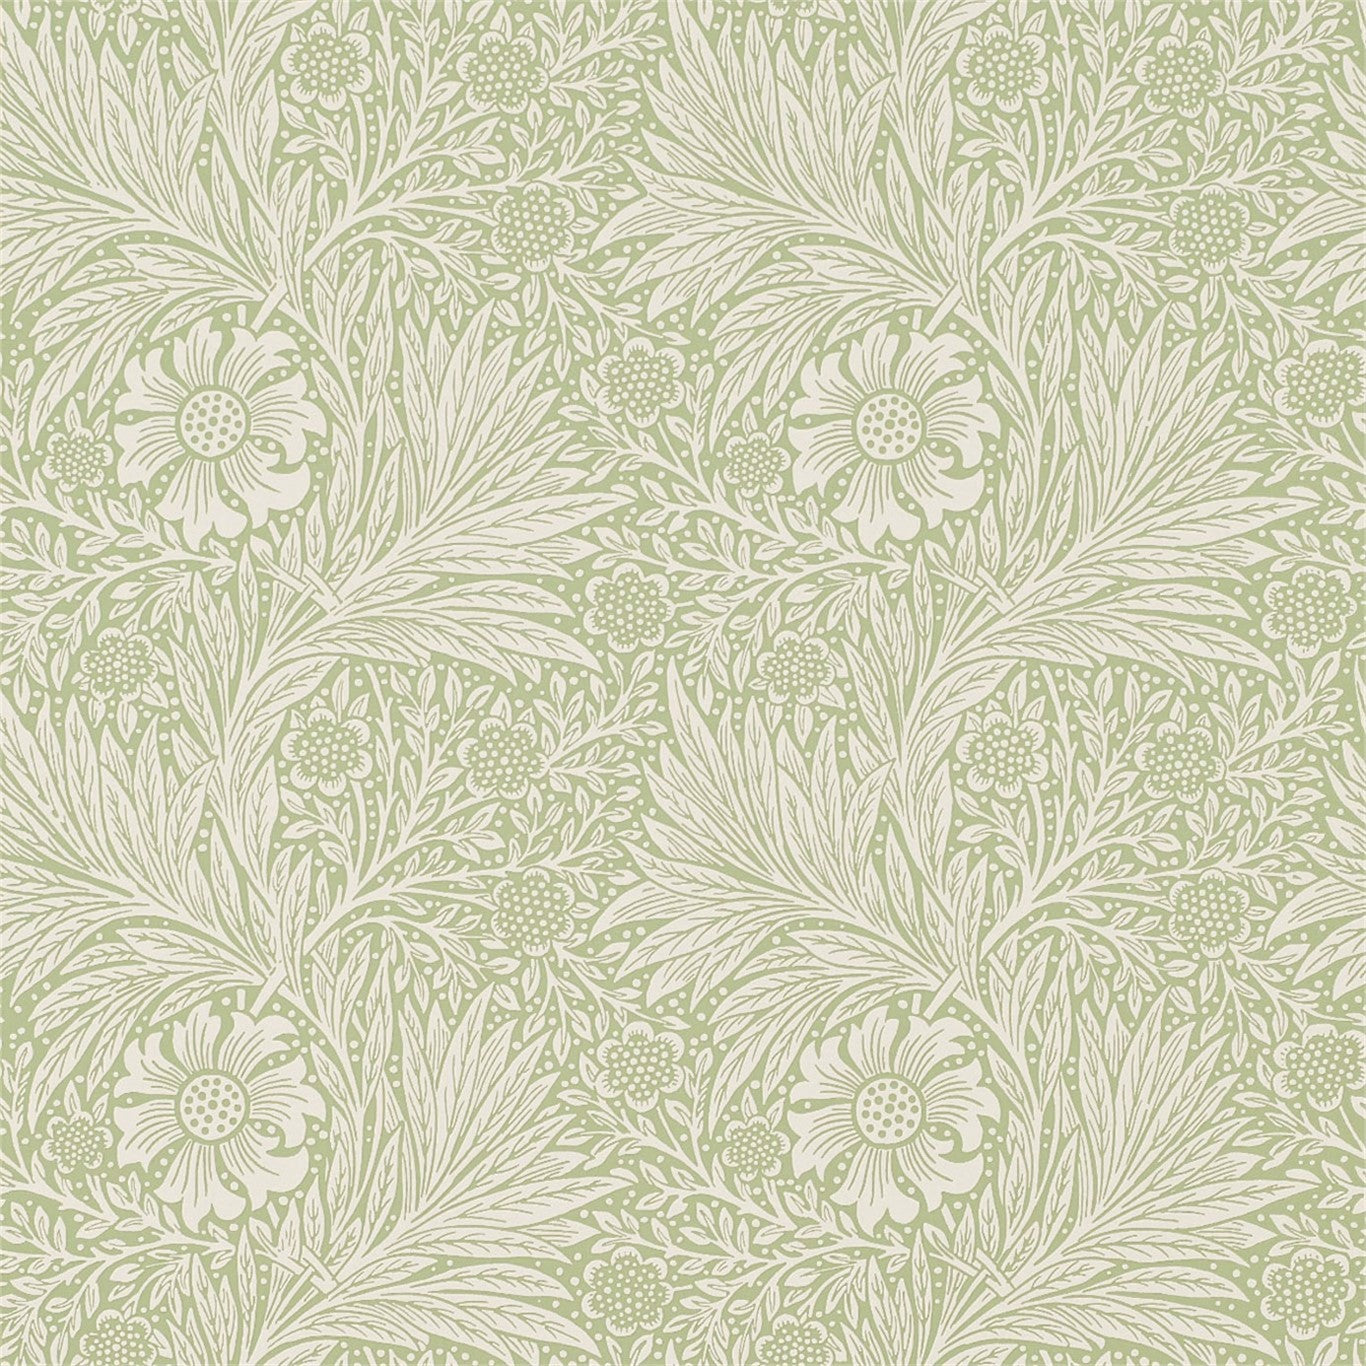 Marigold Artichoke Wallpaper DMCR216483 by Morris & Co